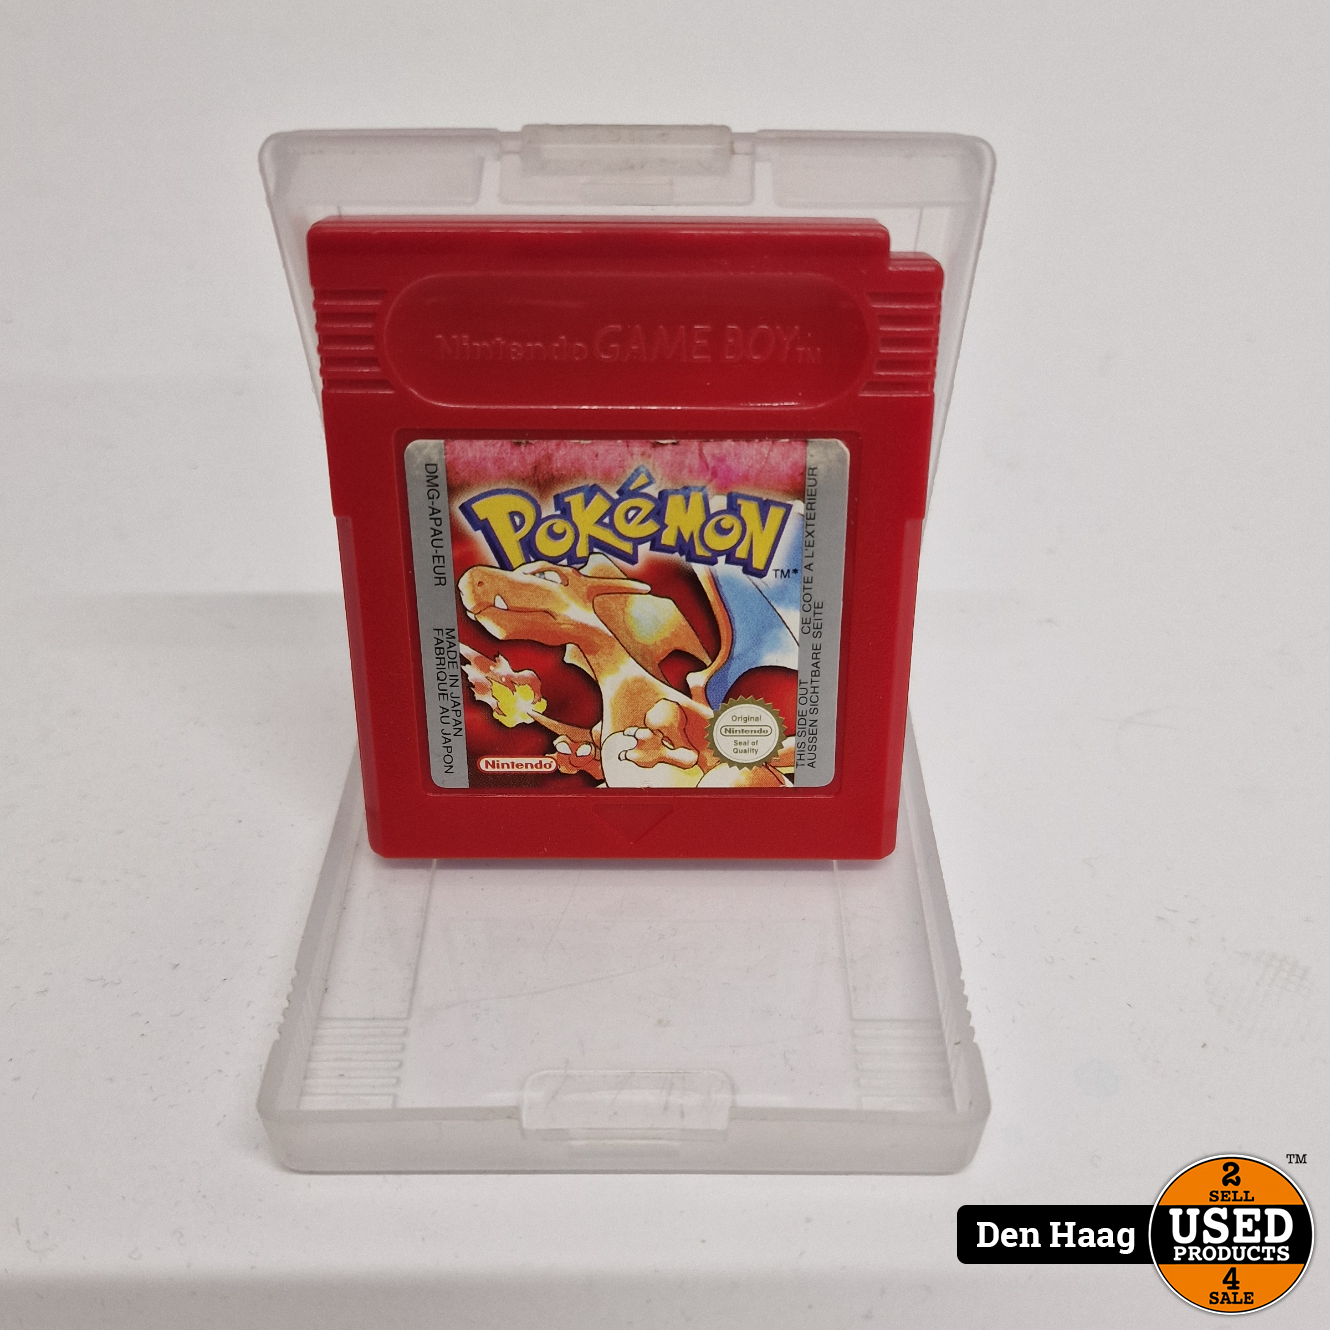 nintendo Nintendo Game Boy Pokemon - Used Products Den Haag